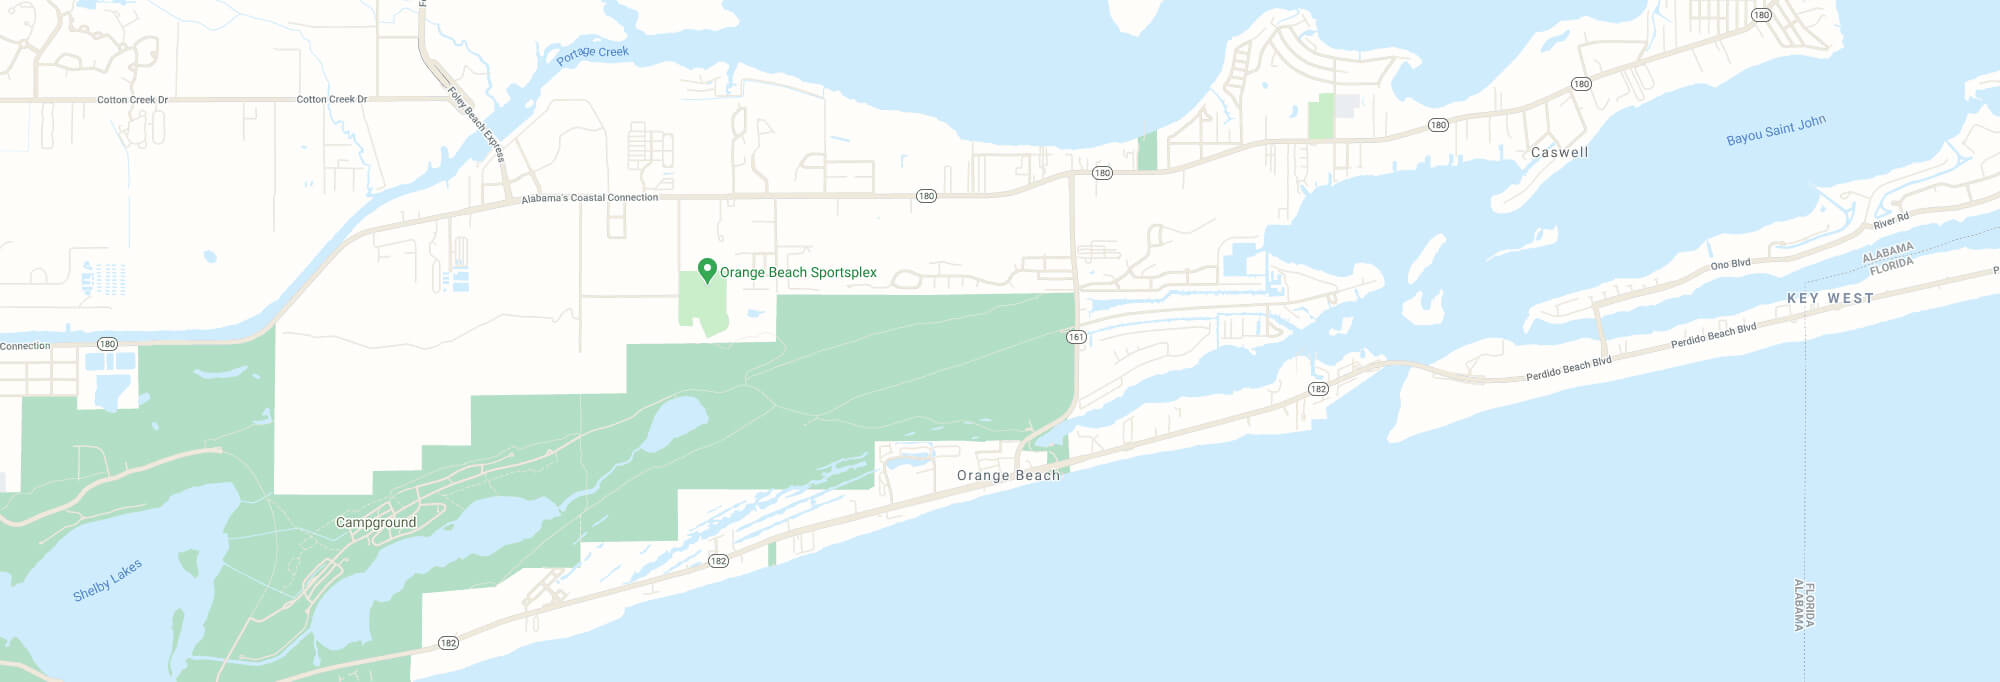 Orange Beach city map